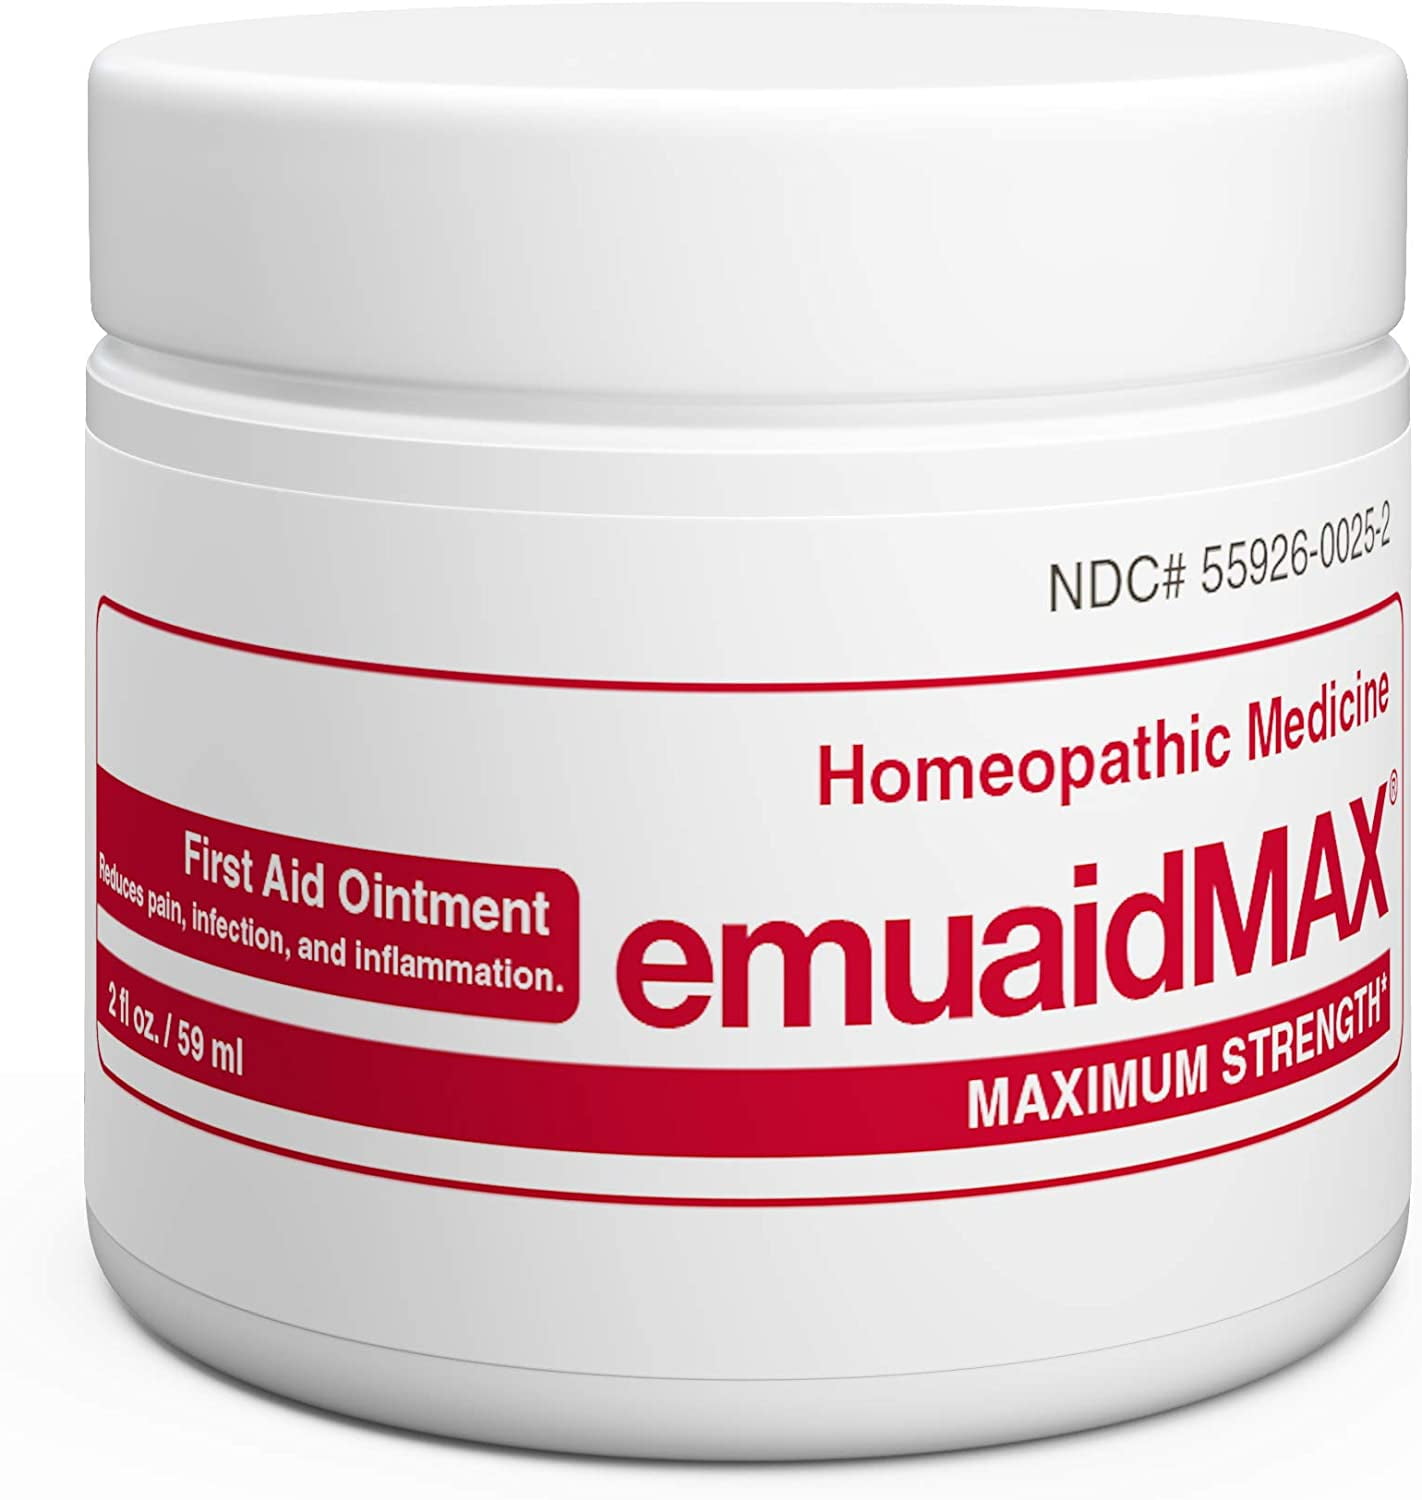 Antifungal cream for eczema